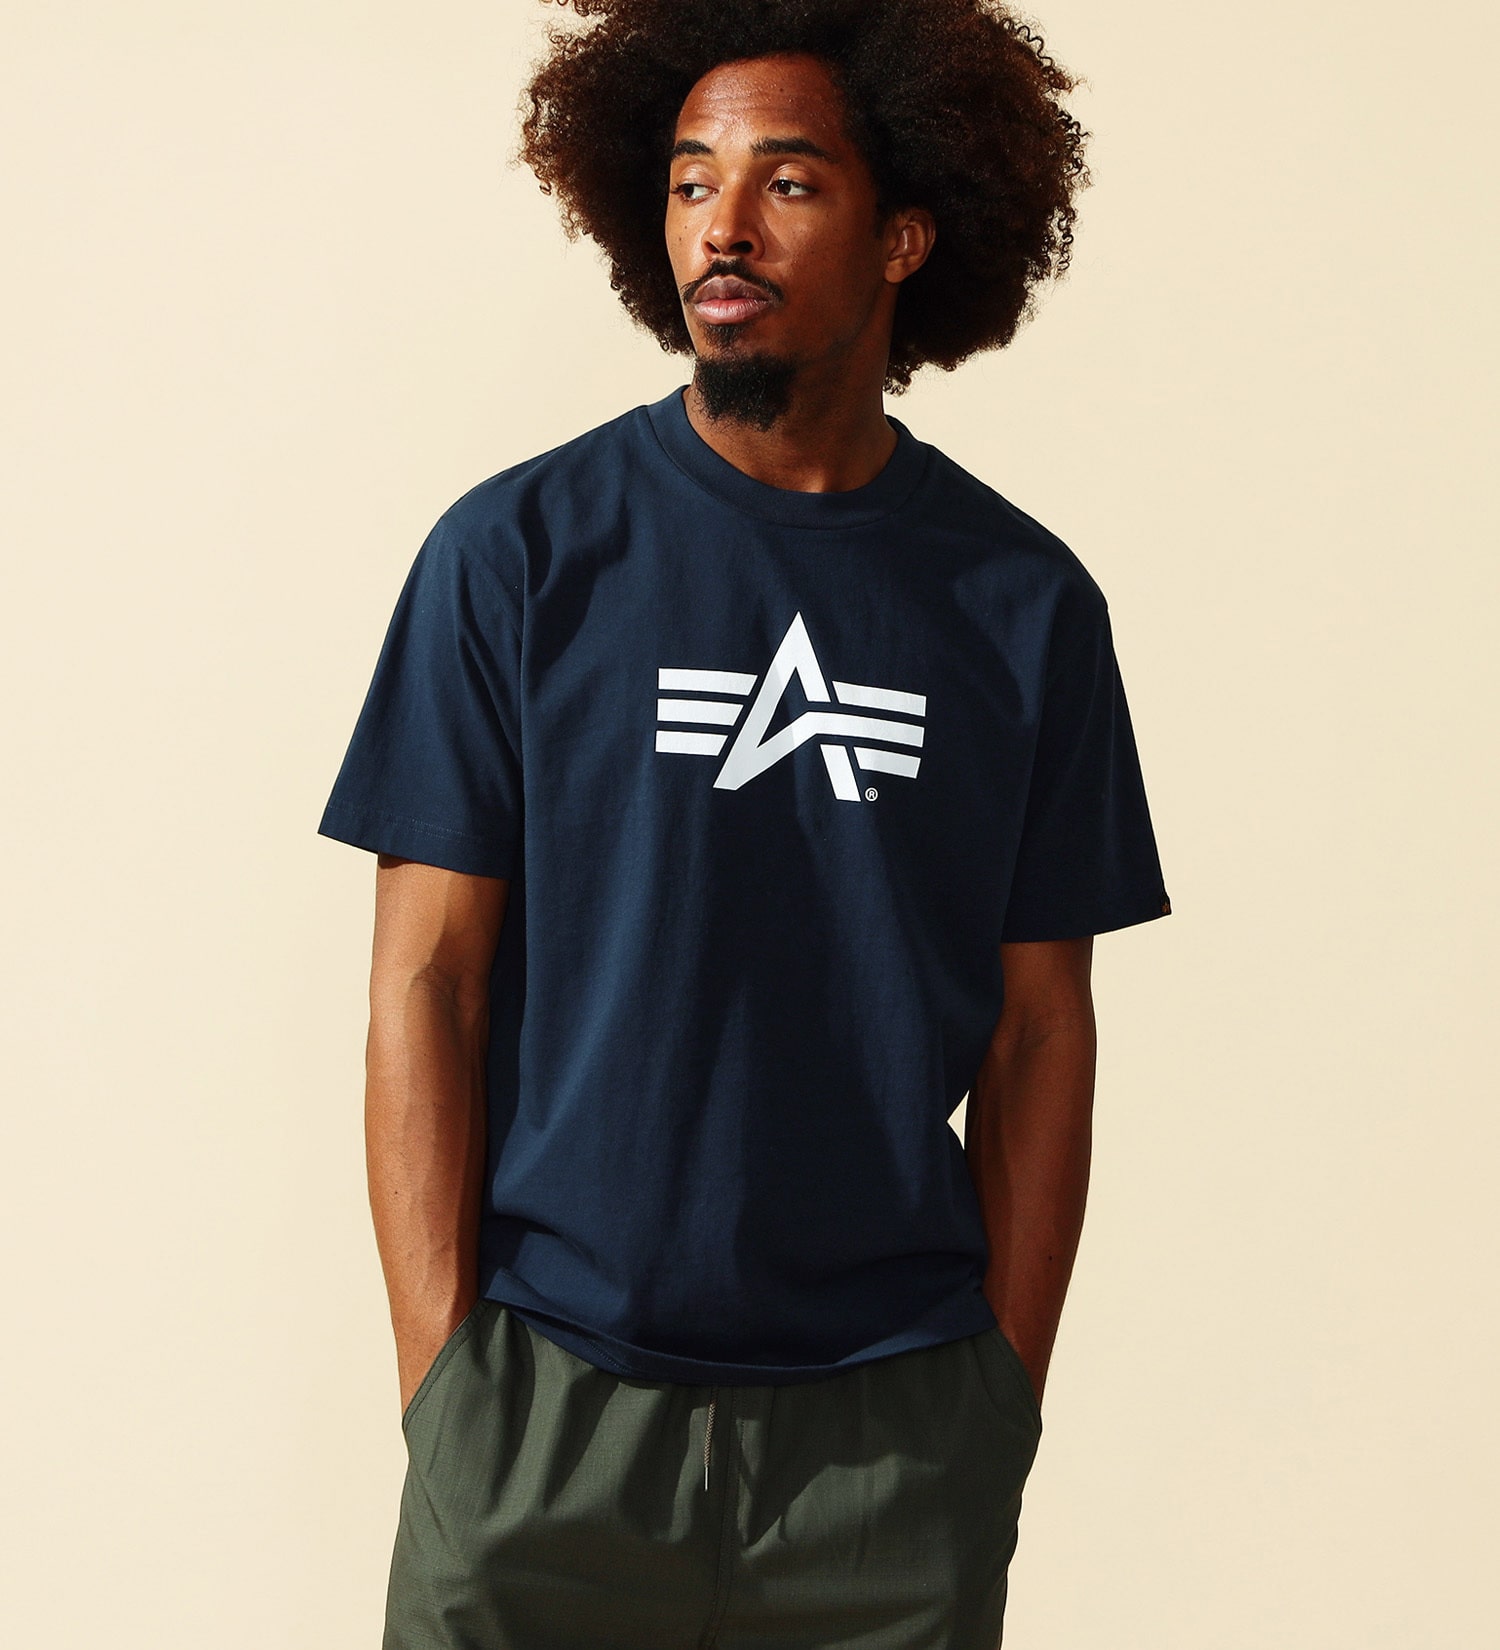 ALPHA(アルファ)のAマークロゴプリントTシャツ 半袖|トップス/Tシャツ/カットソー/メンズ|ネイビー